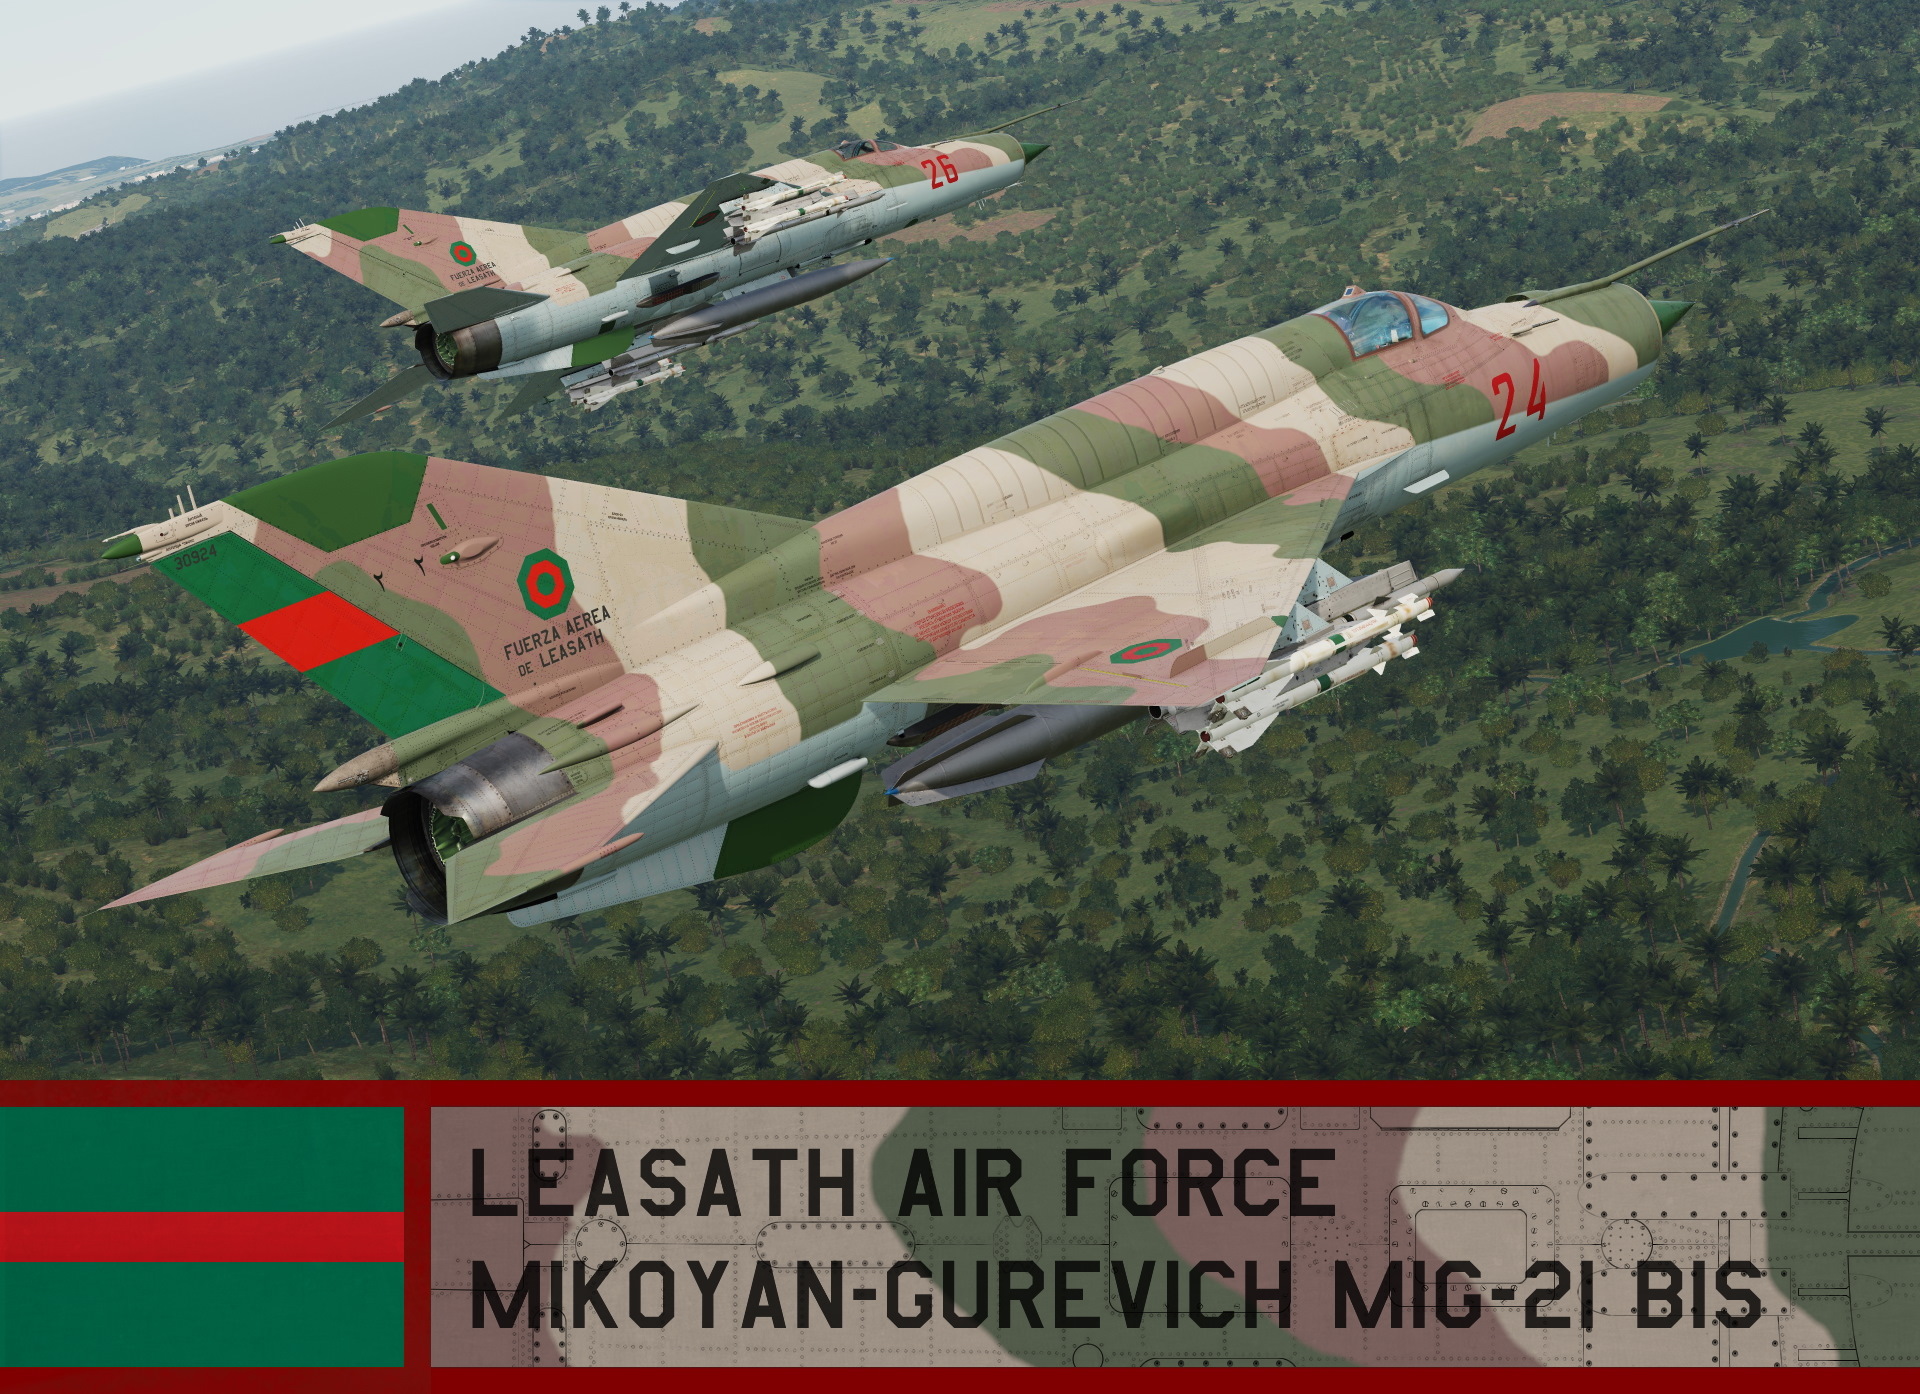 Leasath Air Force Mig-21Bis - Ace Combat X (58th Air Brigade)